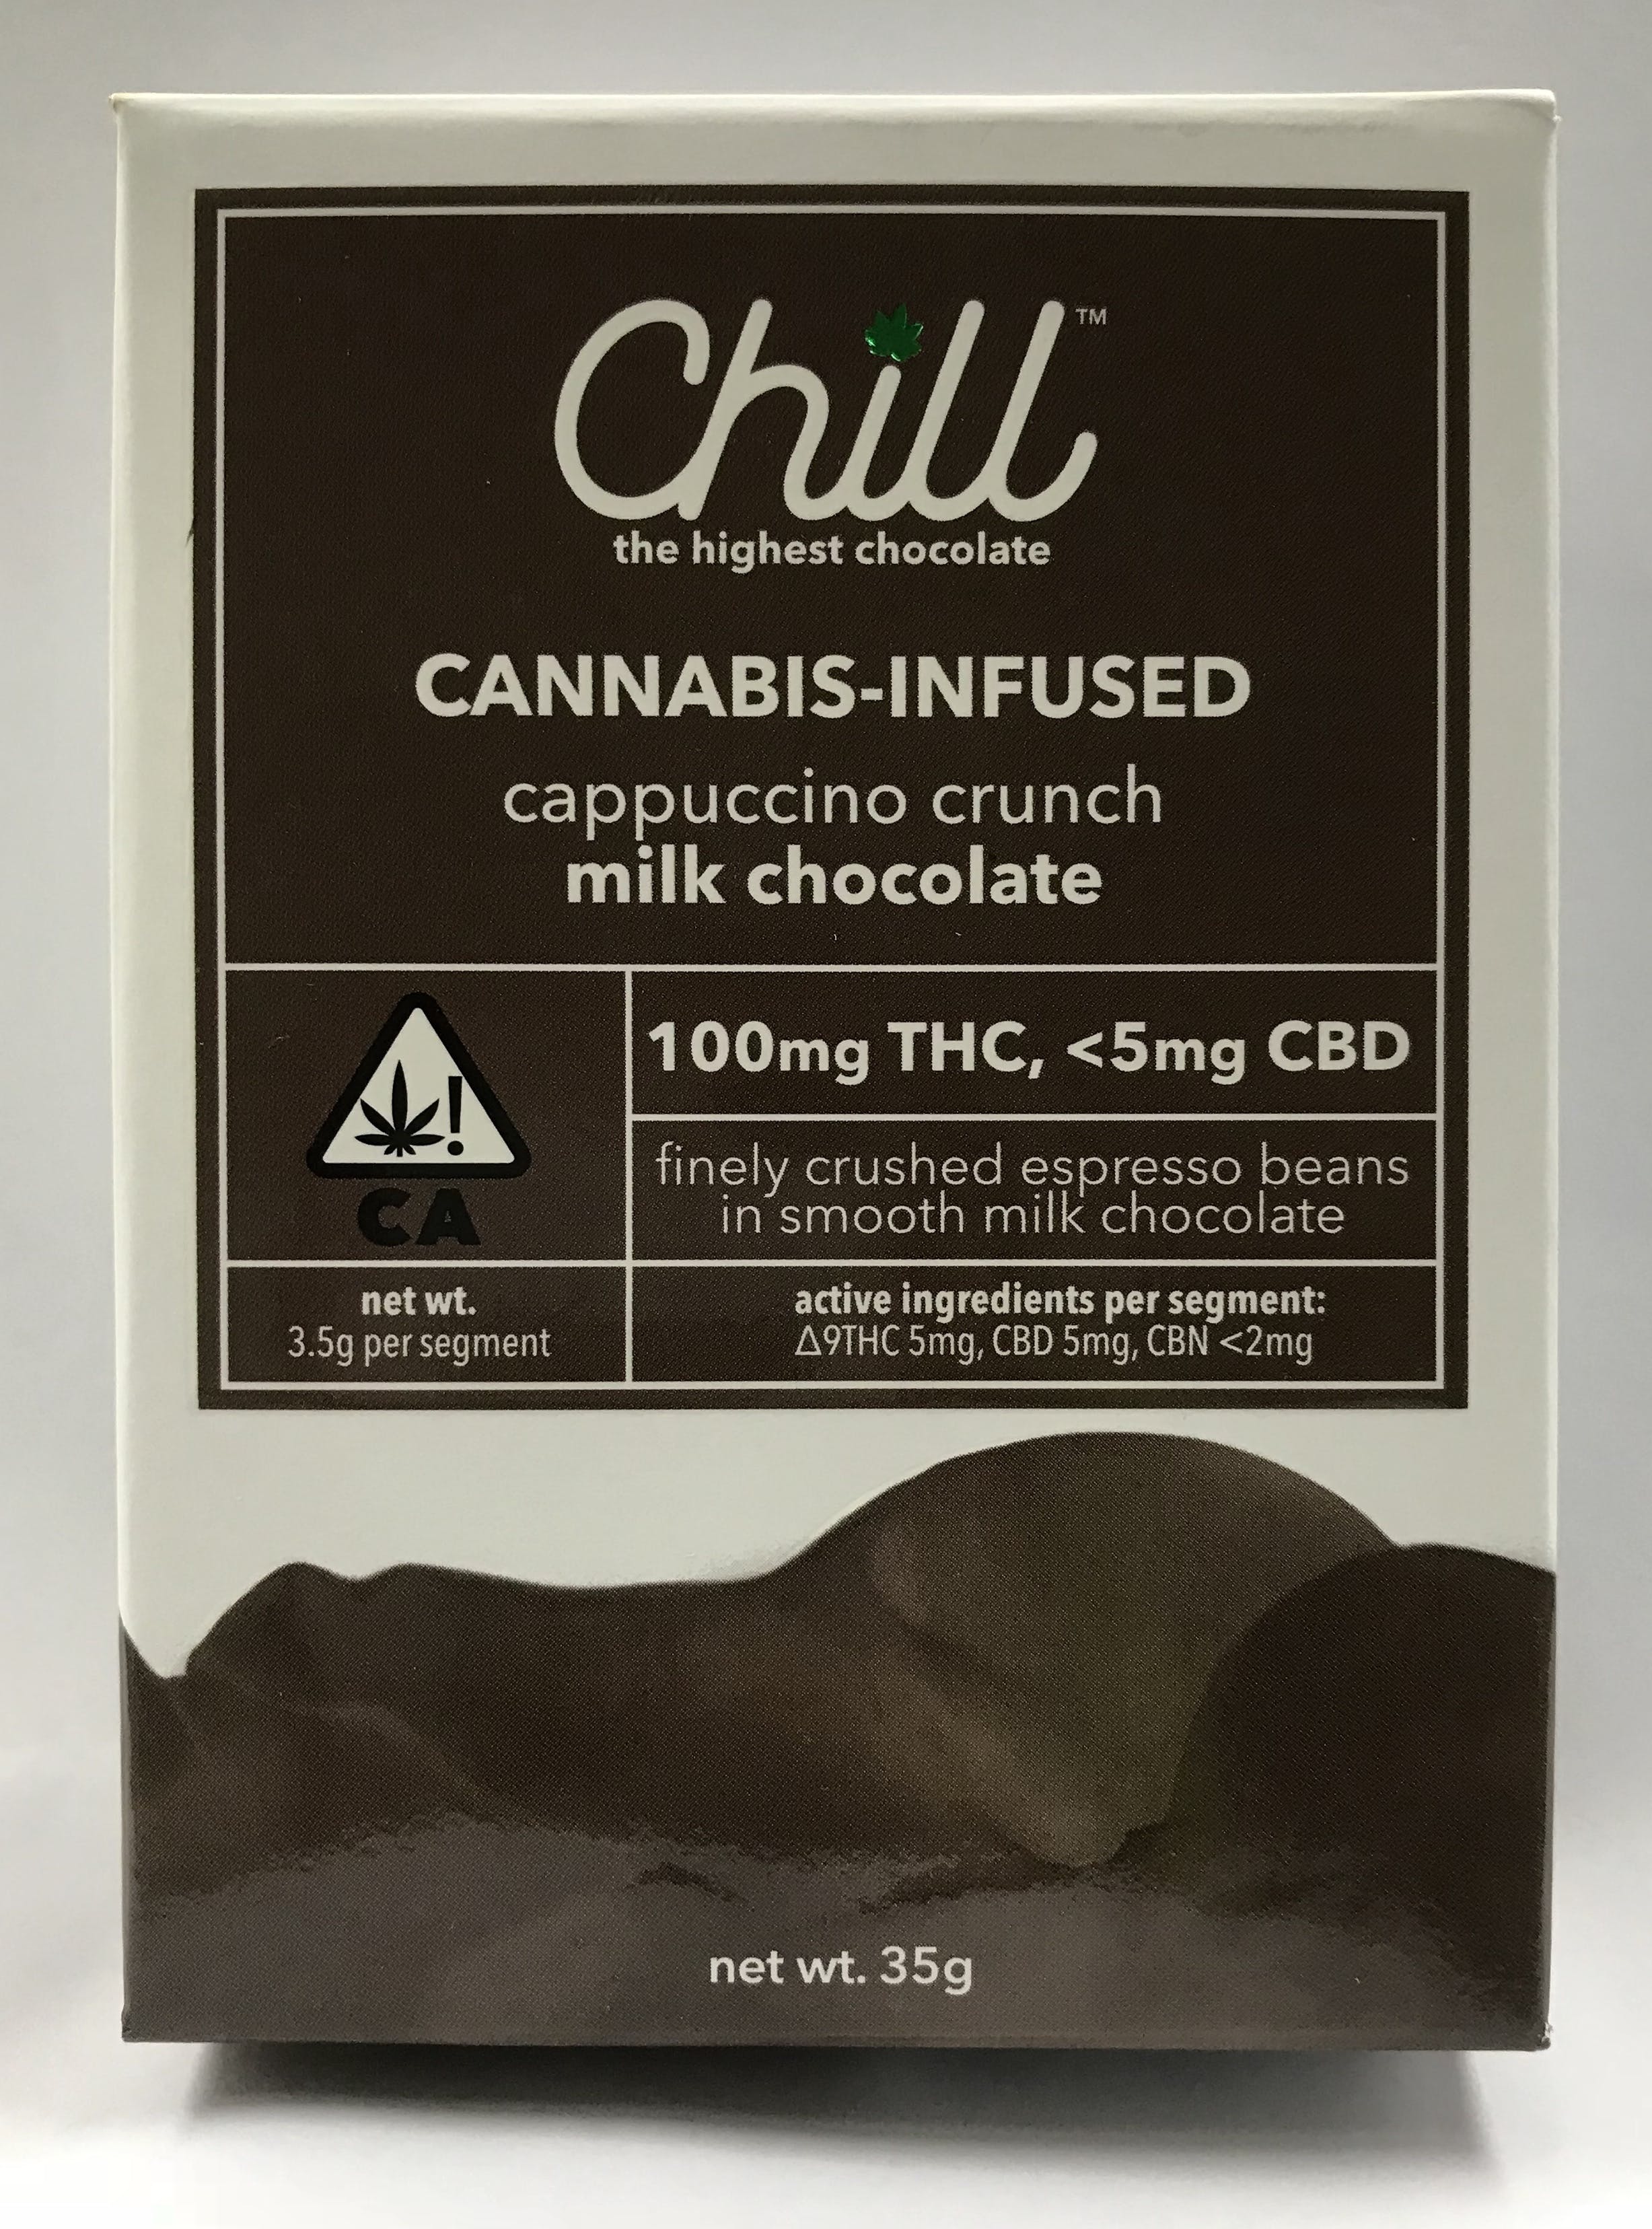 marijuana-dispensaries-beach-center-south-bay-in-gardena-chill-cappuccino-crunch